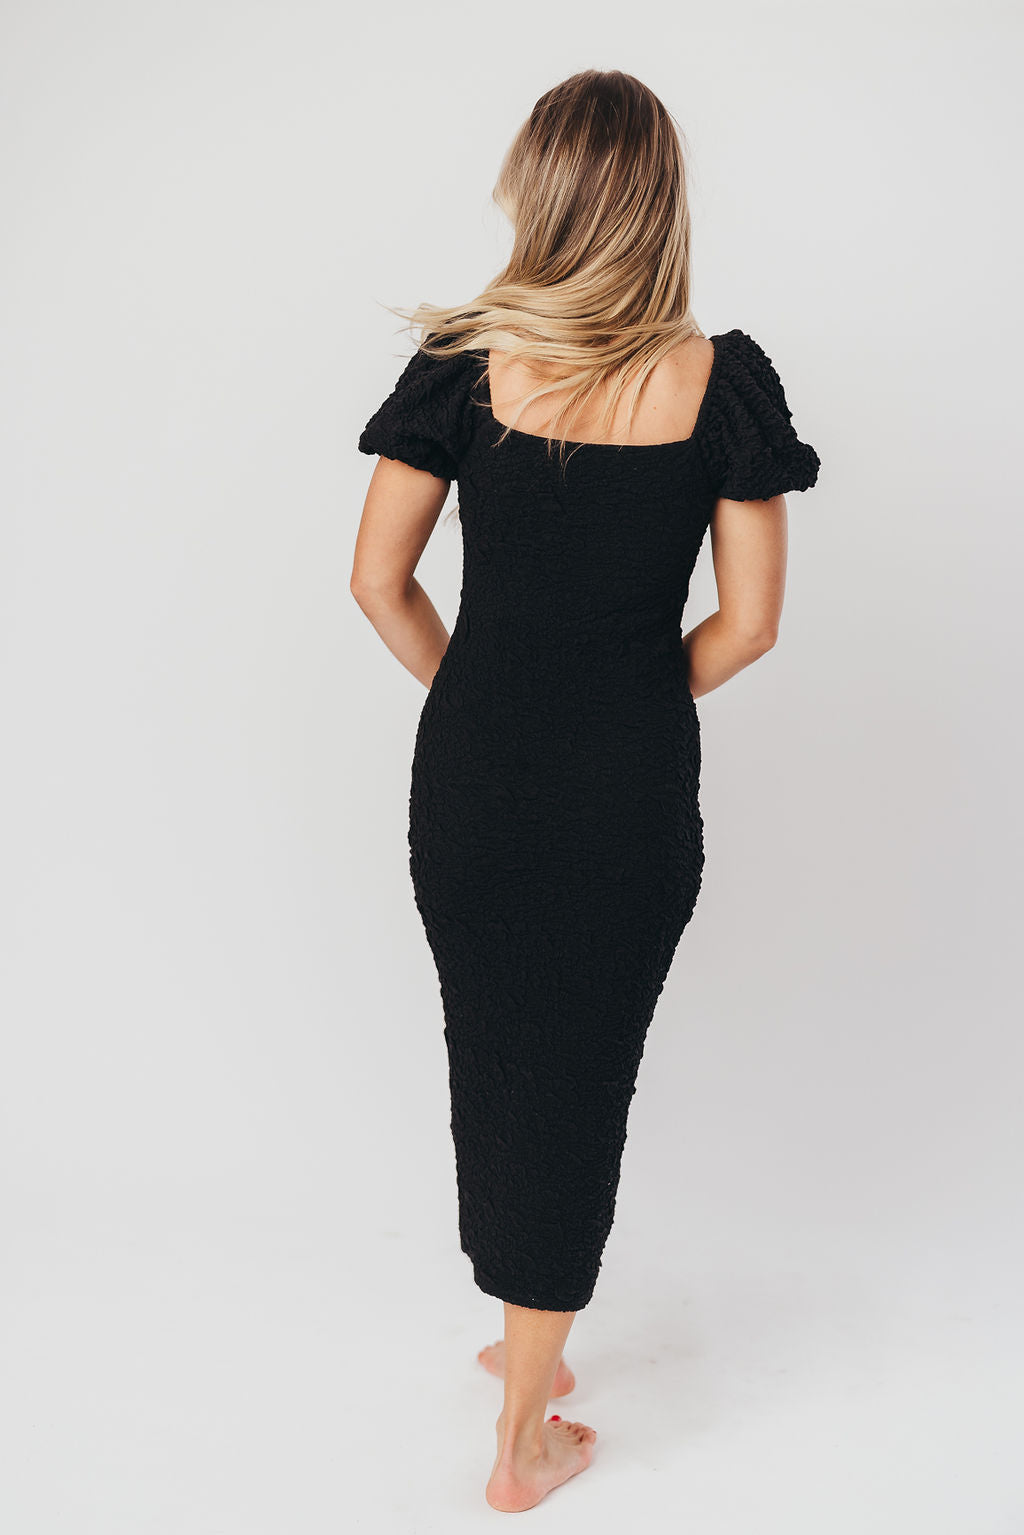 Blakeley Textured Midi Dress in Black - Bump Friendly & Inclusive Sizing (S-3XL)